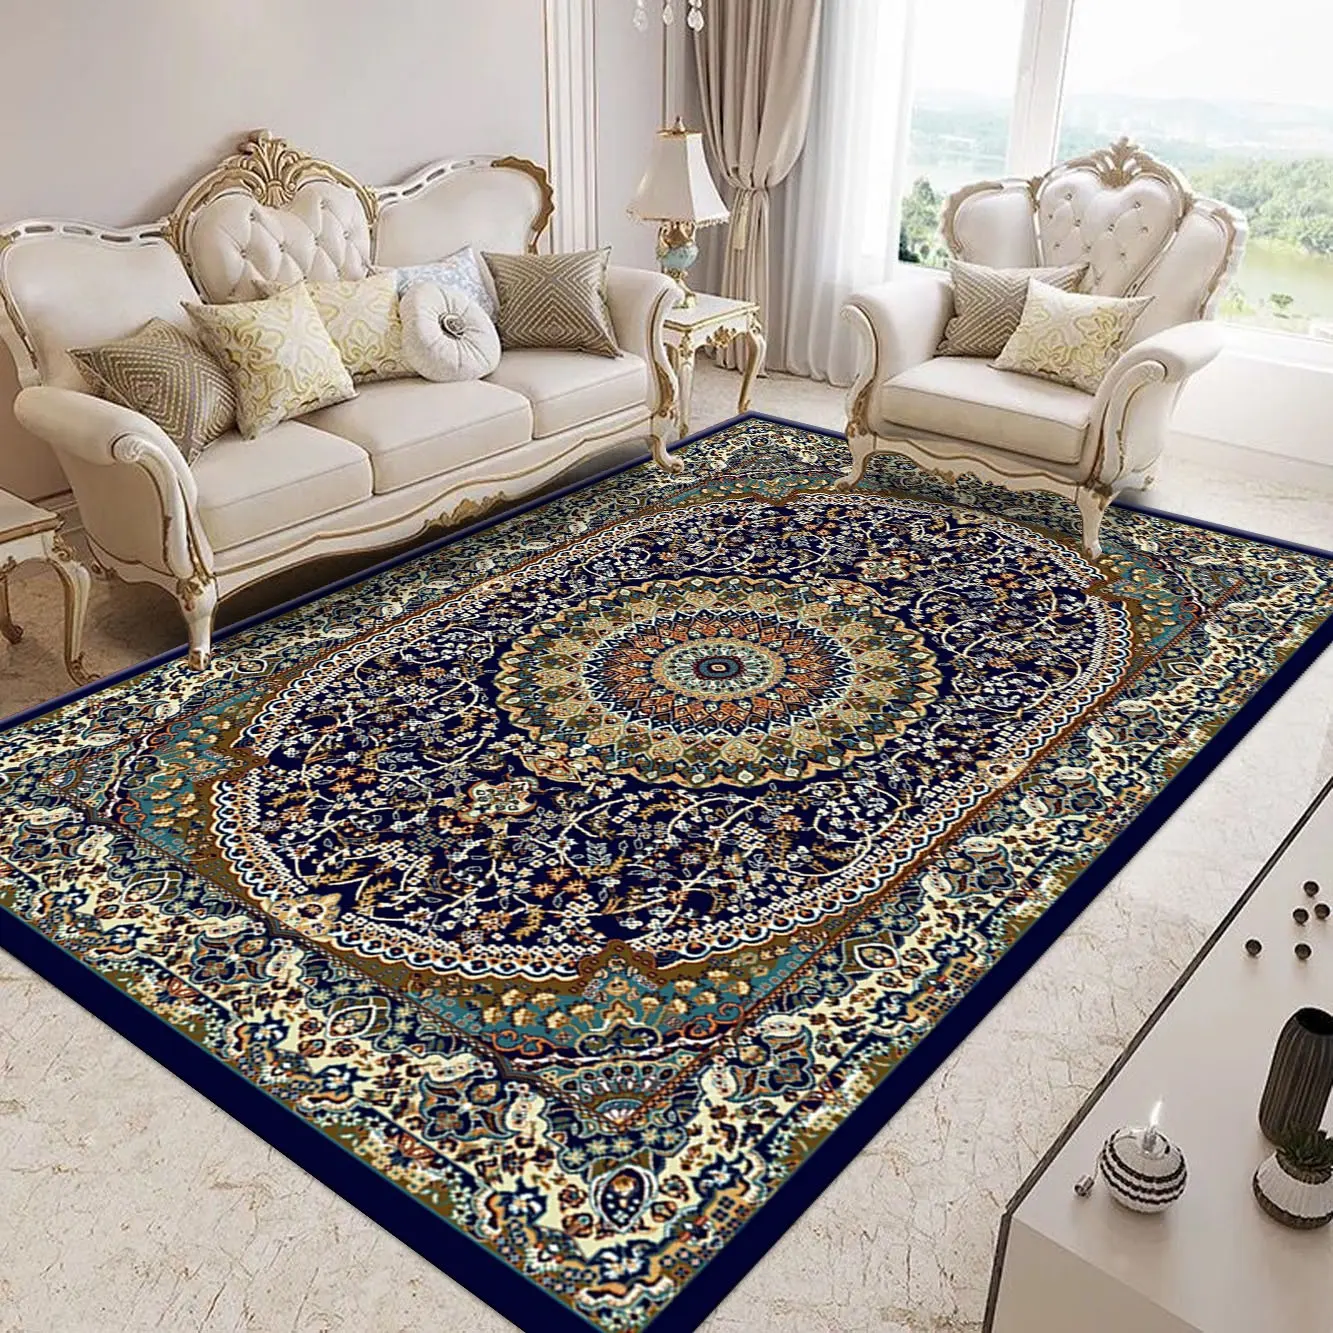 Venda quente boa qualidade persa tapetes tapetes e tapetes